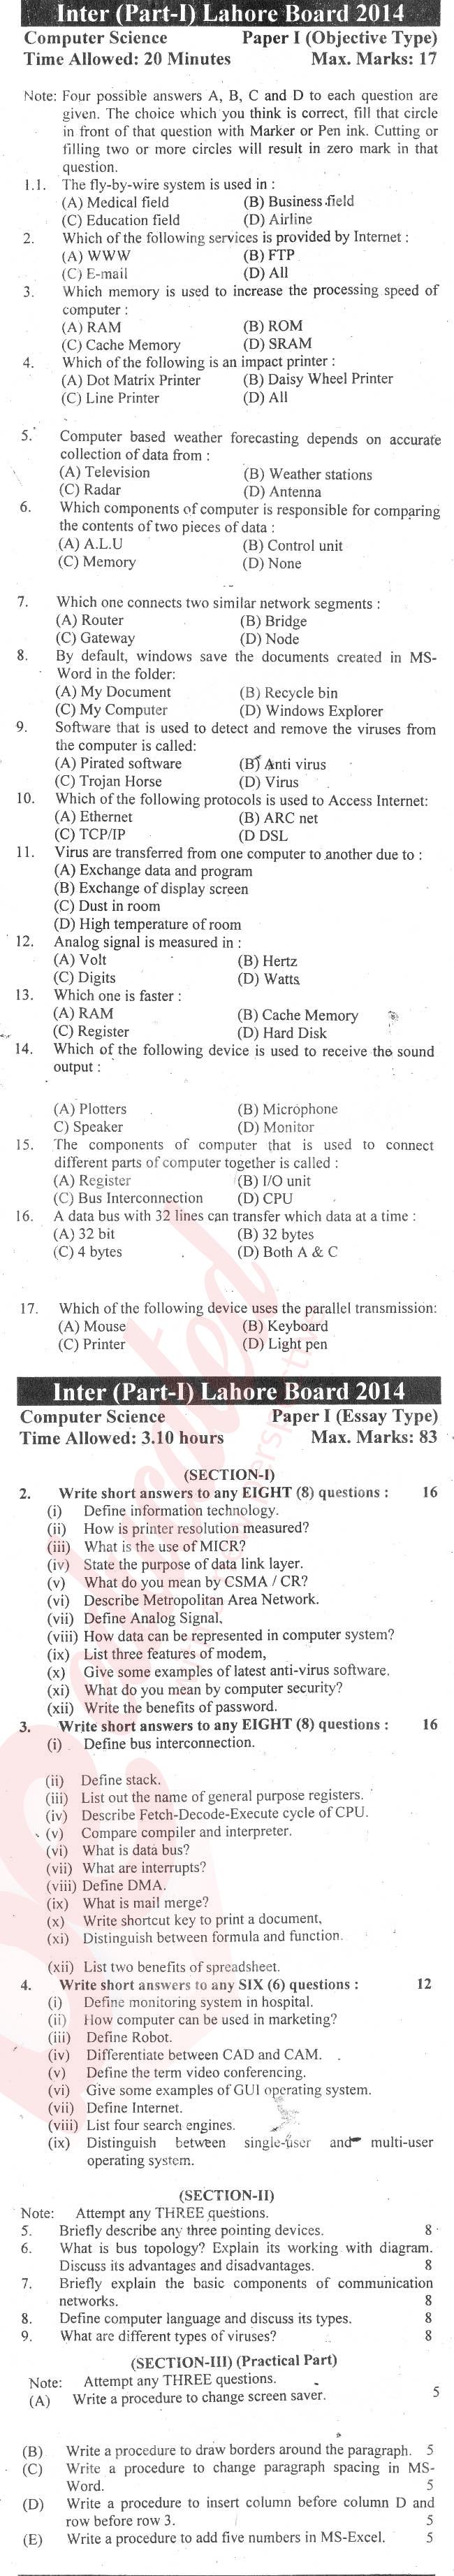 Computer Science ICS Part 1 Past Paper Group 1 BISE Lahore 2014